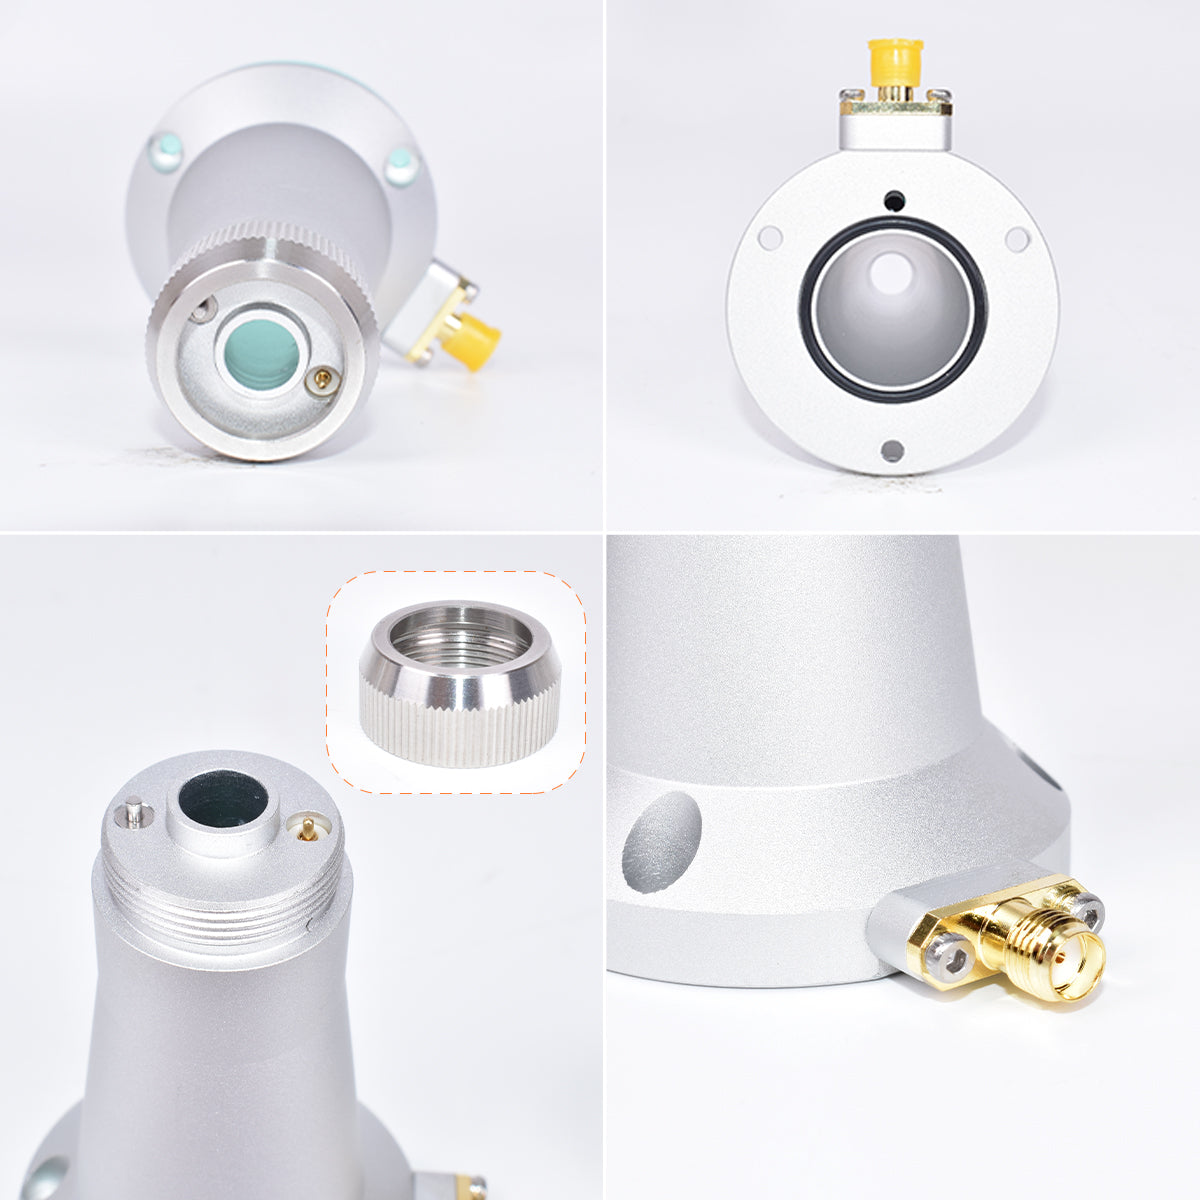 Startnow Laser Nozzle Connector Sensor Bodor Replacement Accessories ECO Ceramic Holder For Laser Cutting Machine